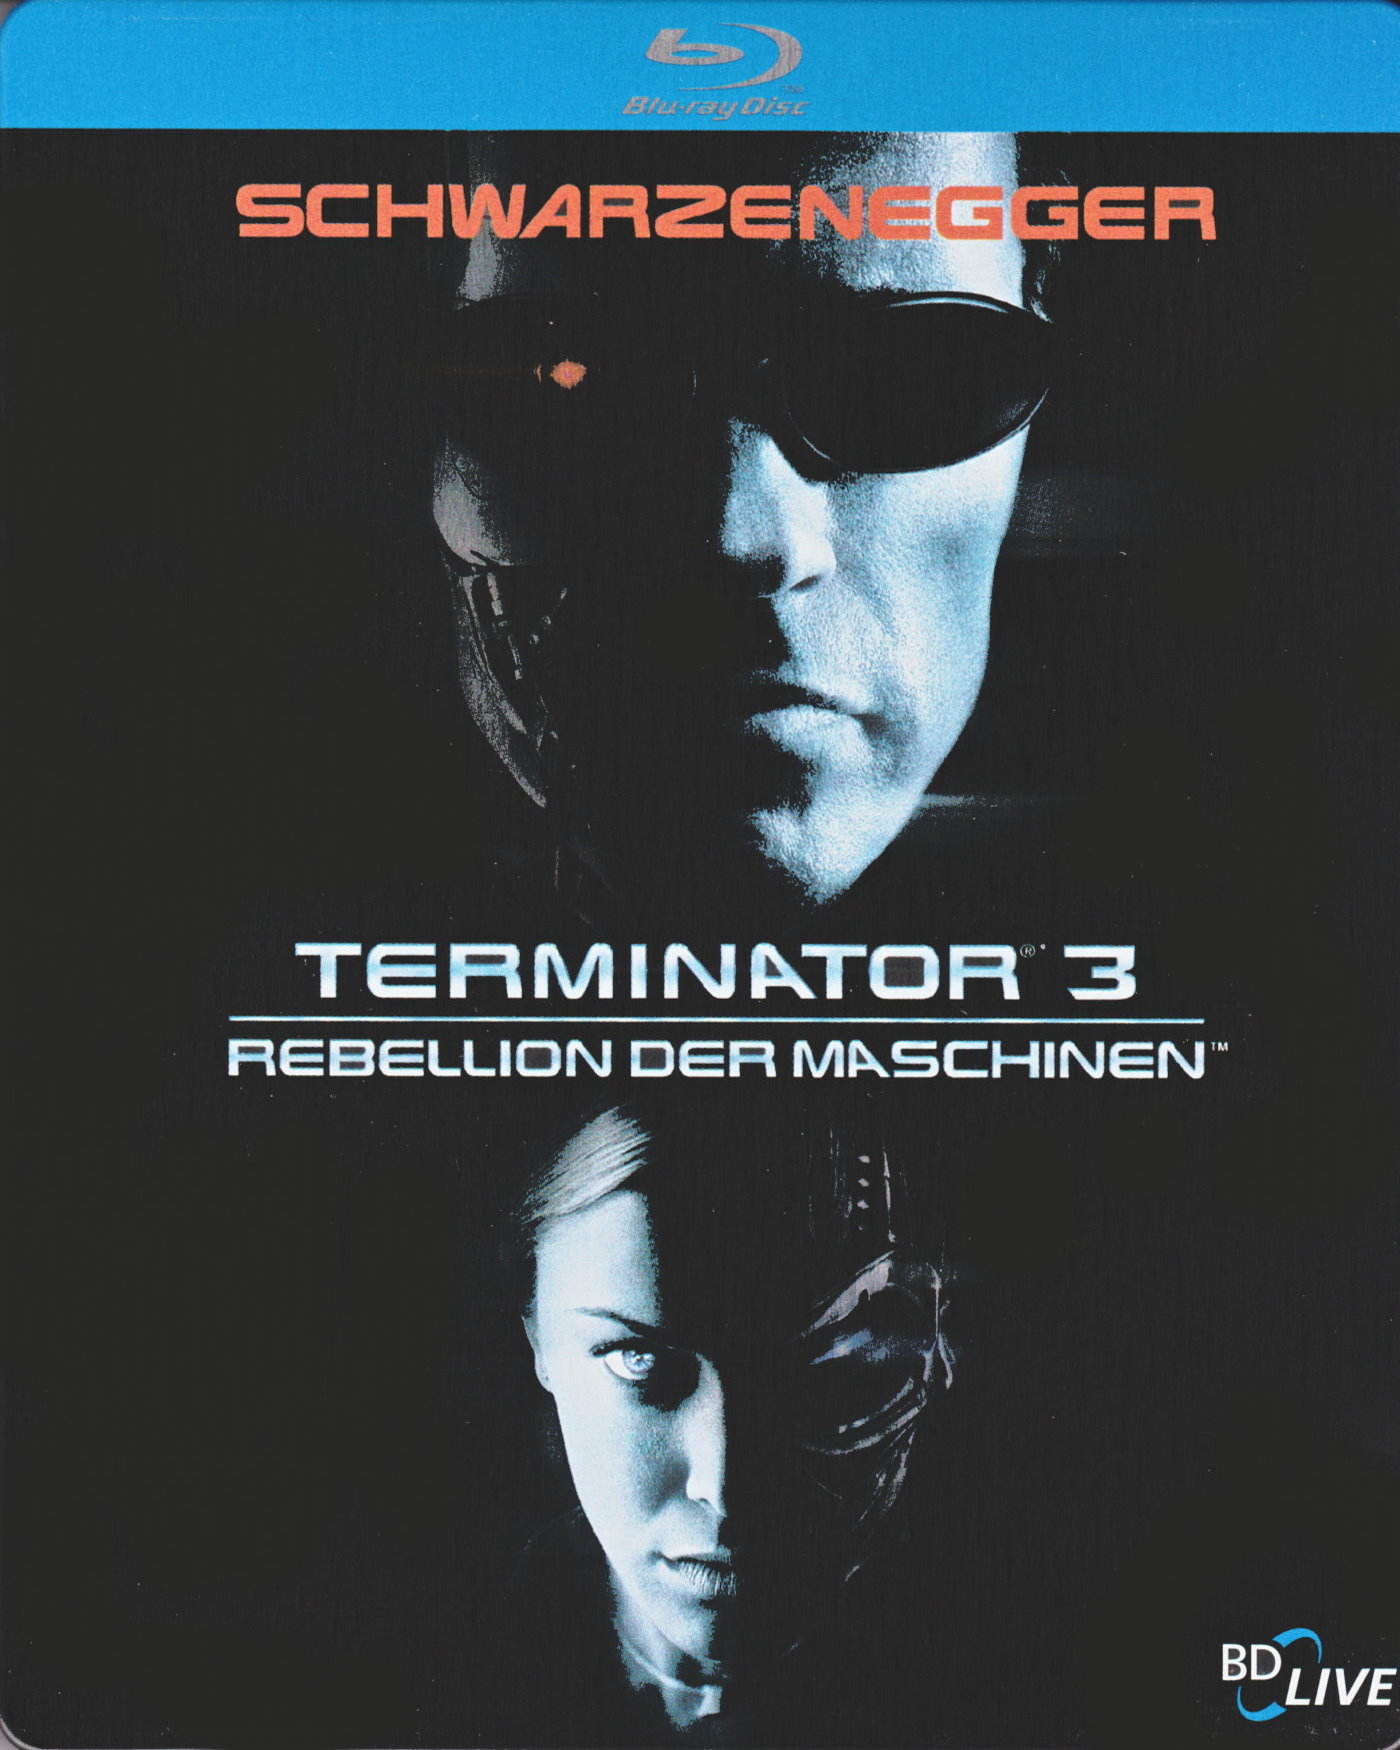 Cover - Terminator 3 - Rebellion der Maschinen.jpg